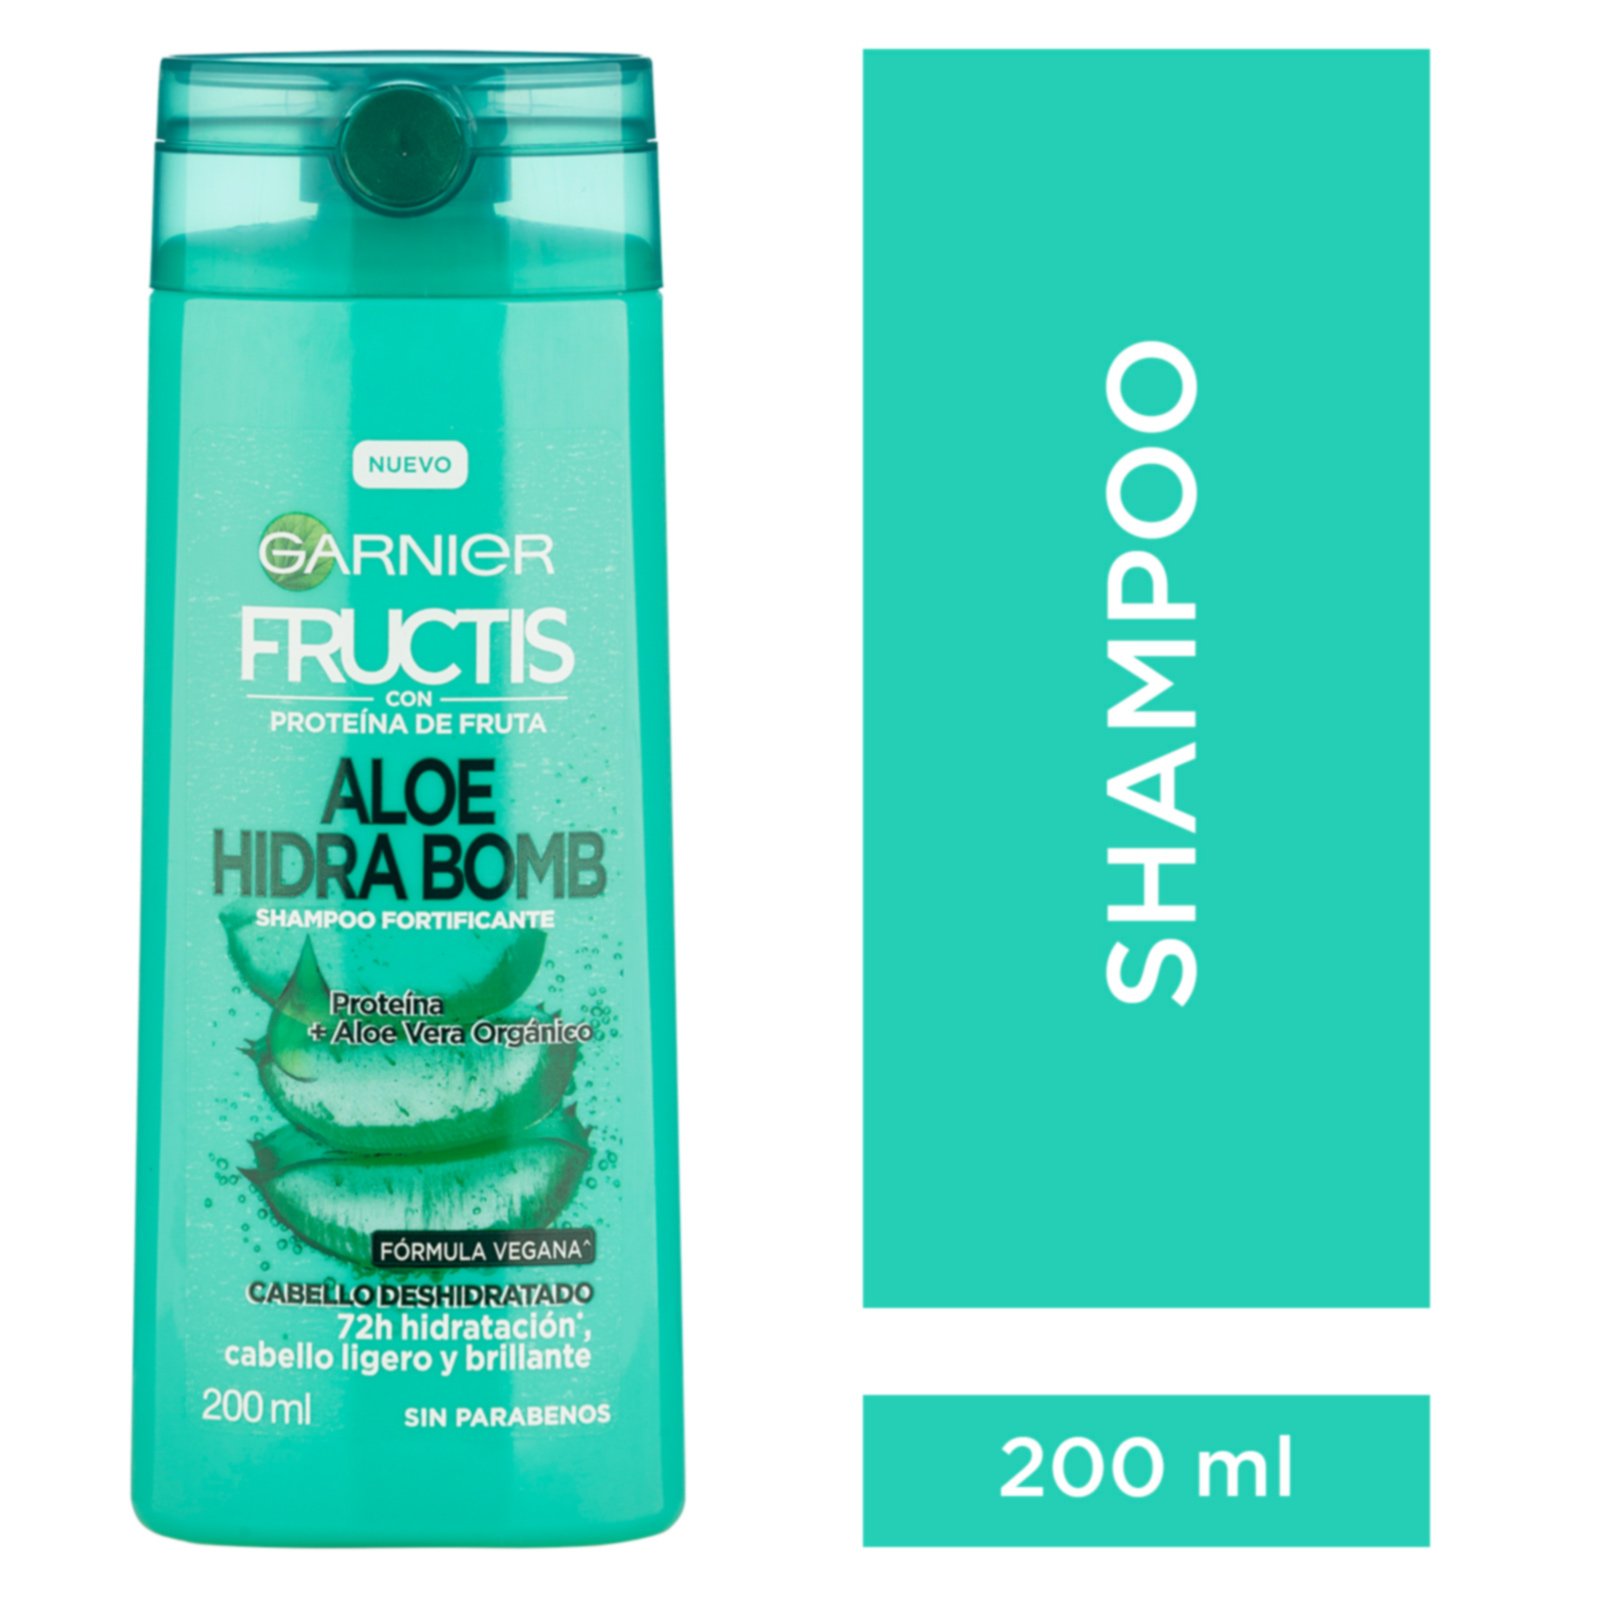 Fructis Aloe Hidra Bomb Shampoo - 200ml